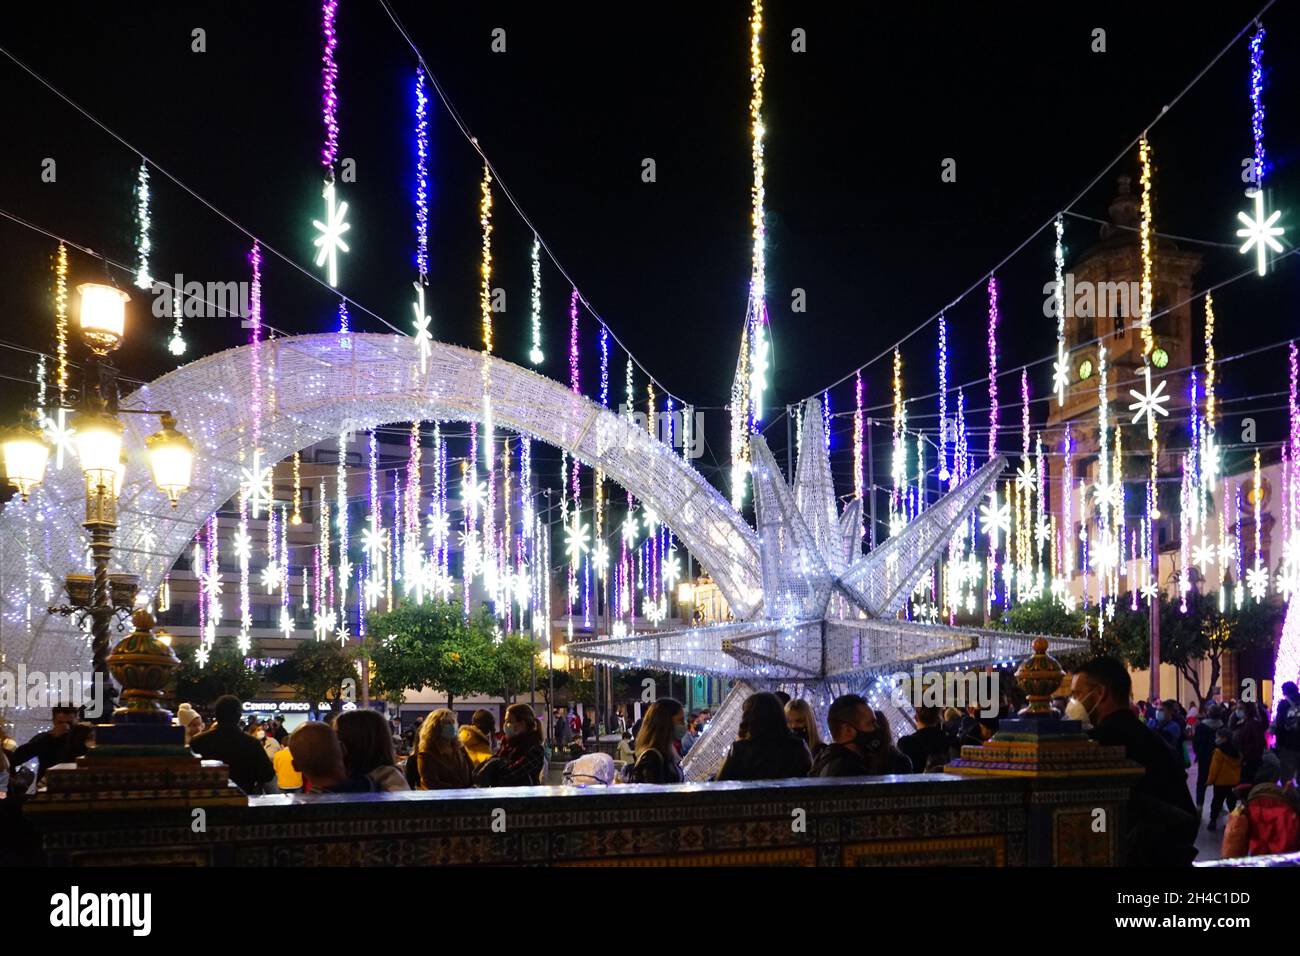 Algeciras, Spain: Christmas lights at the central place of Algeciras Stock Photo